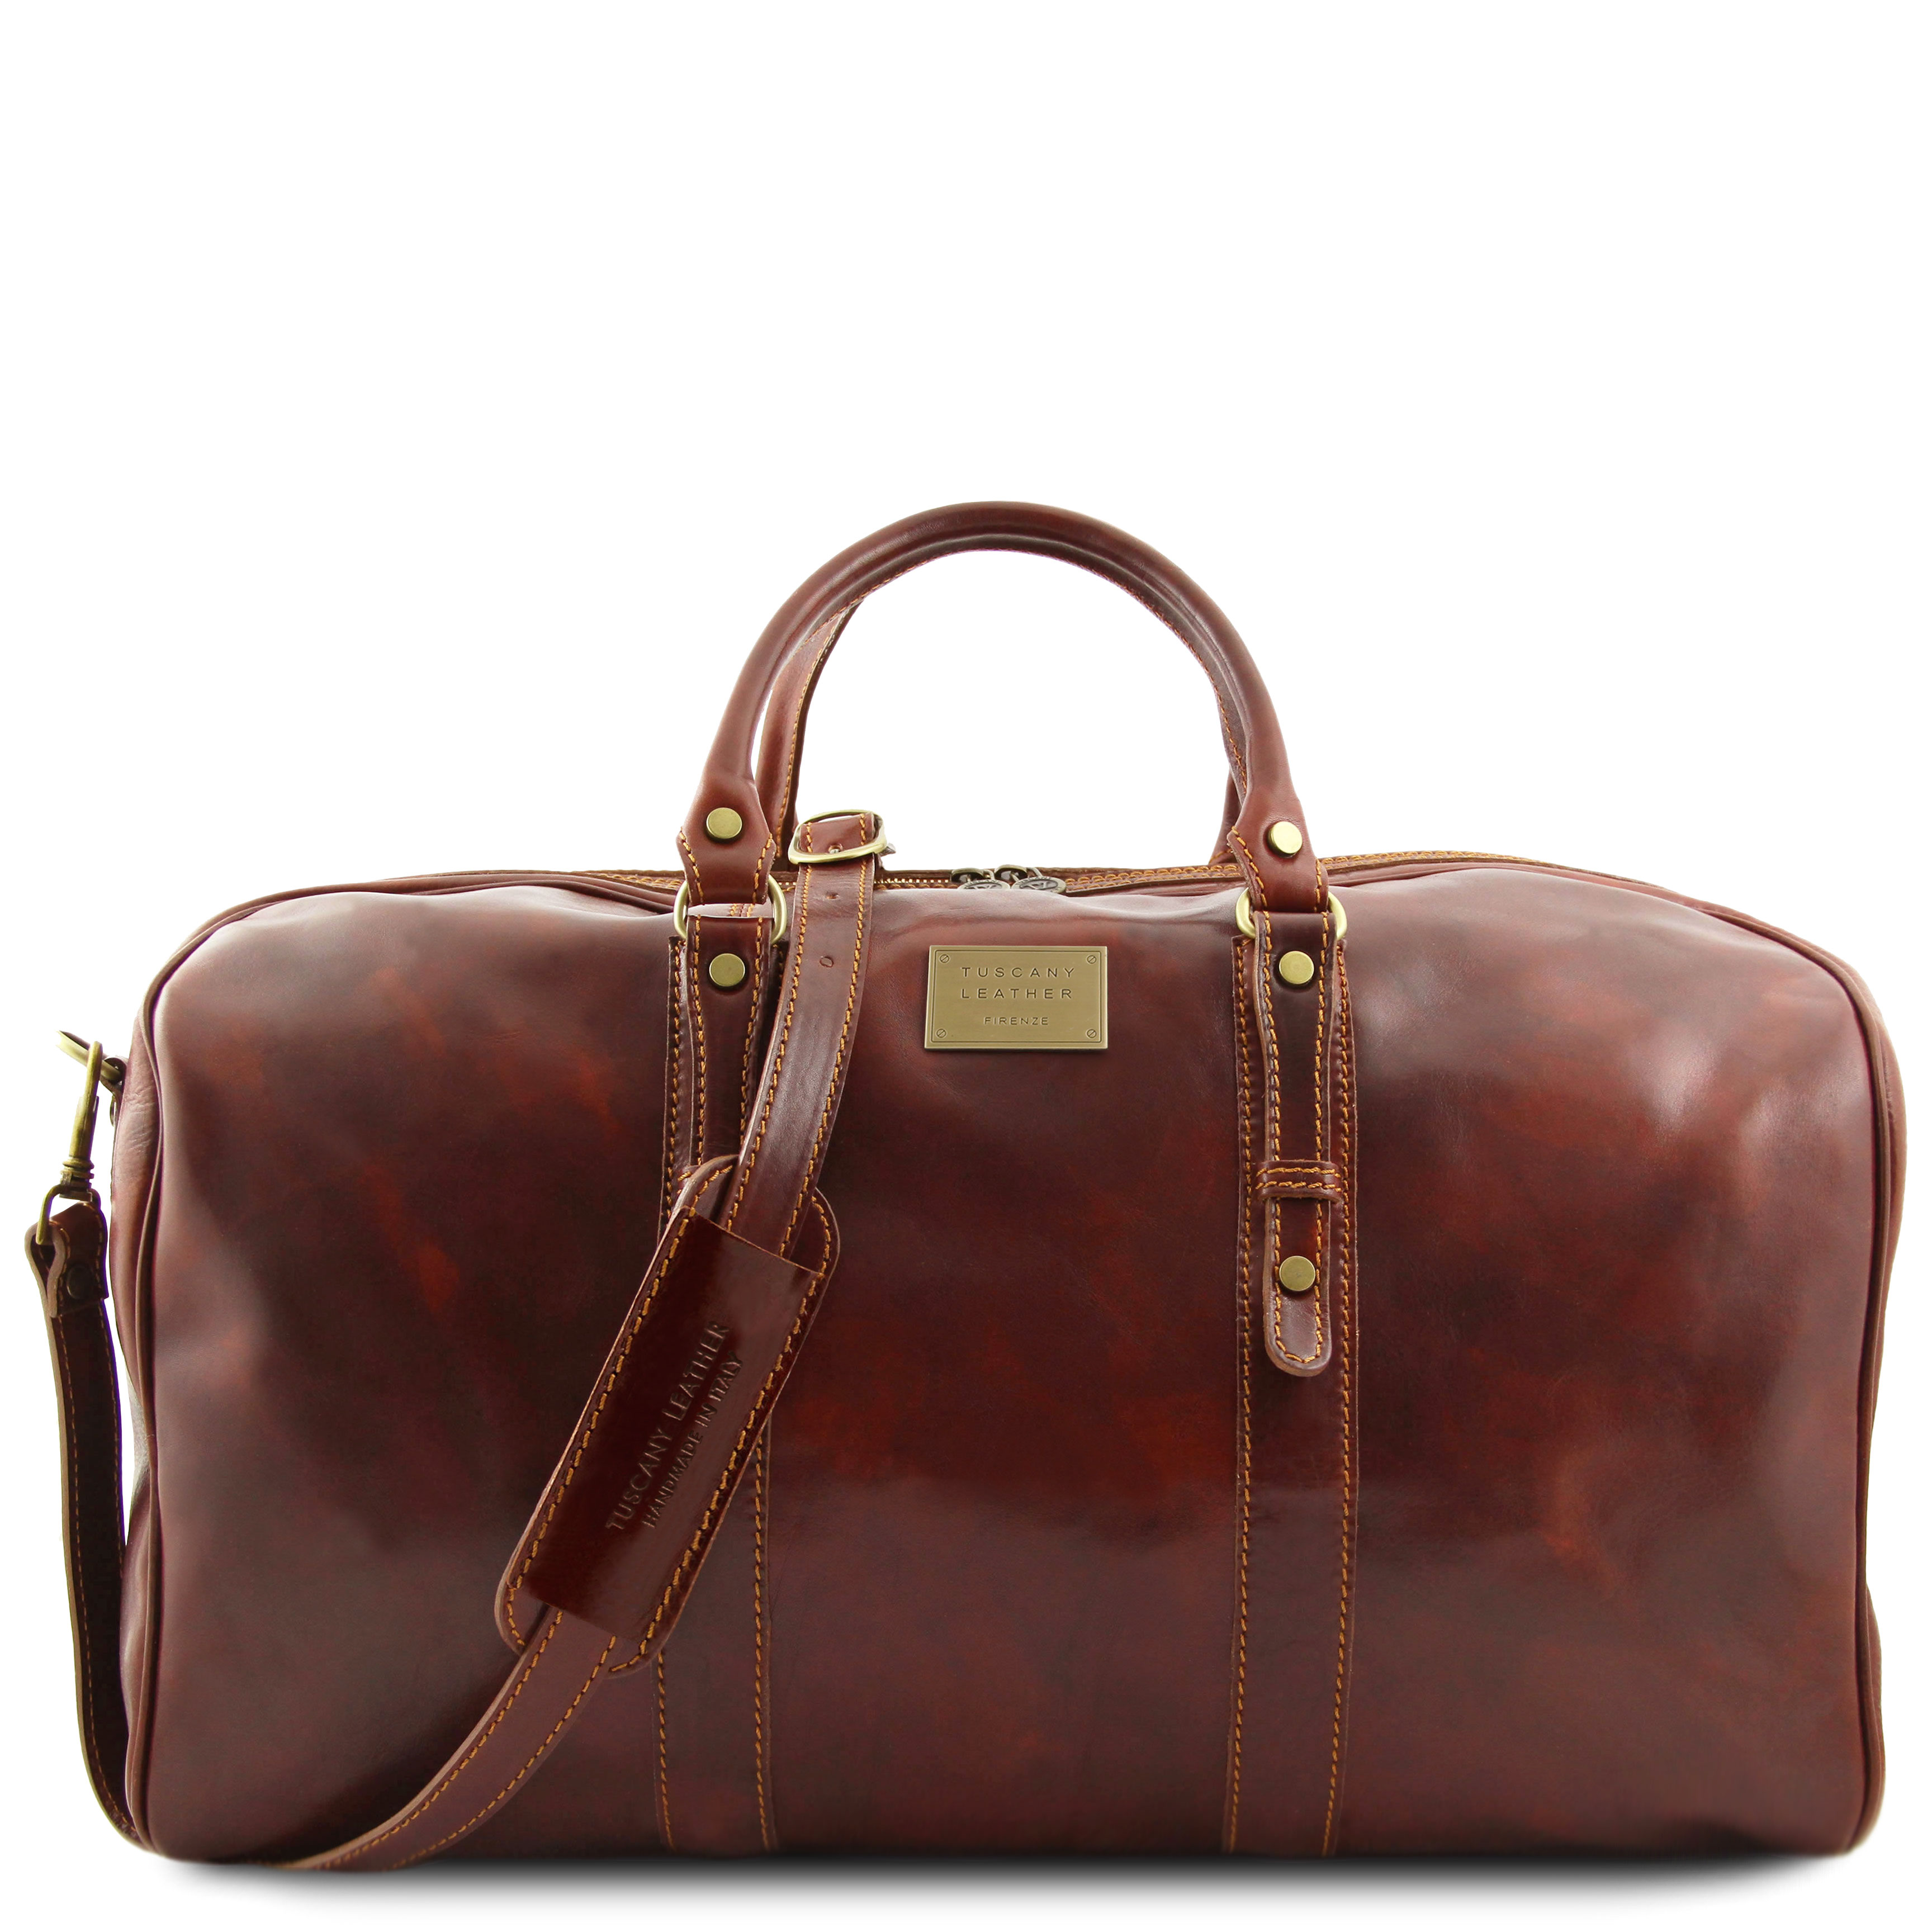 Francoforte Exclusive Leather Weekender Travel Bag - Large size Brown